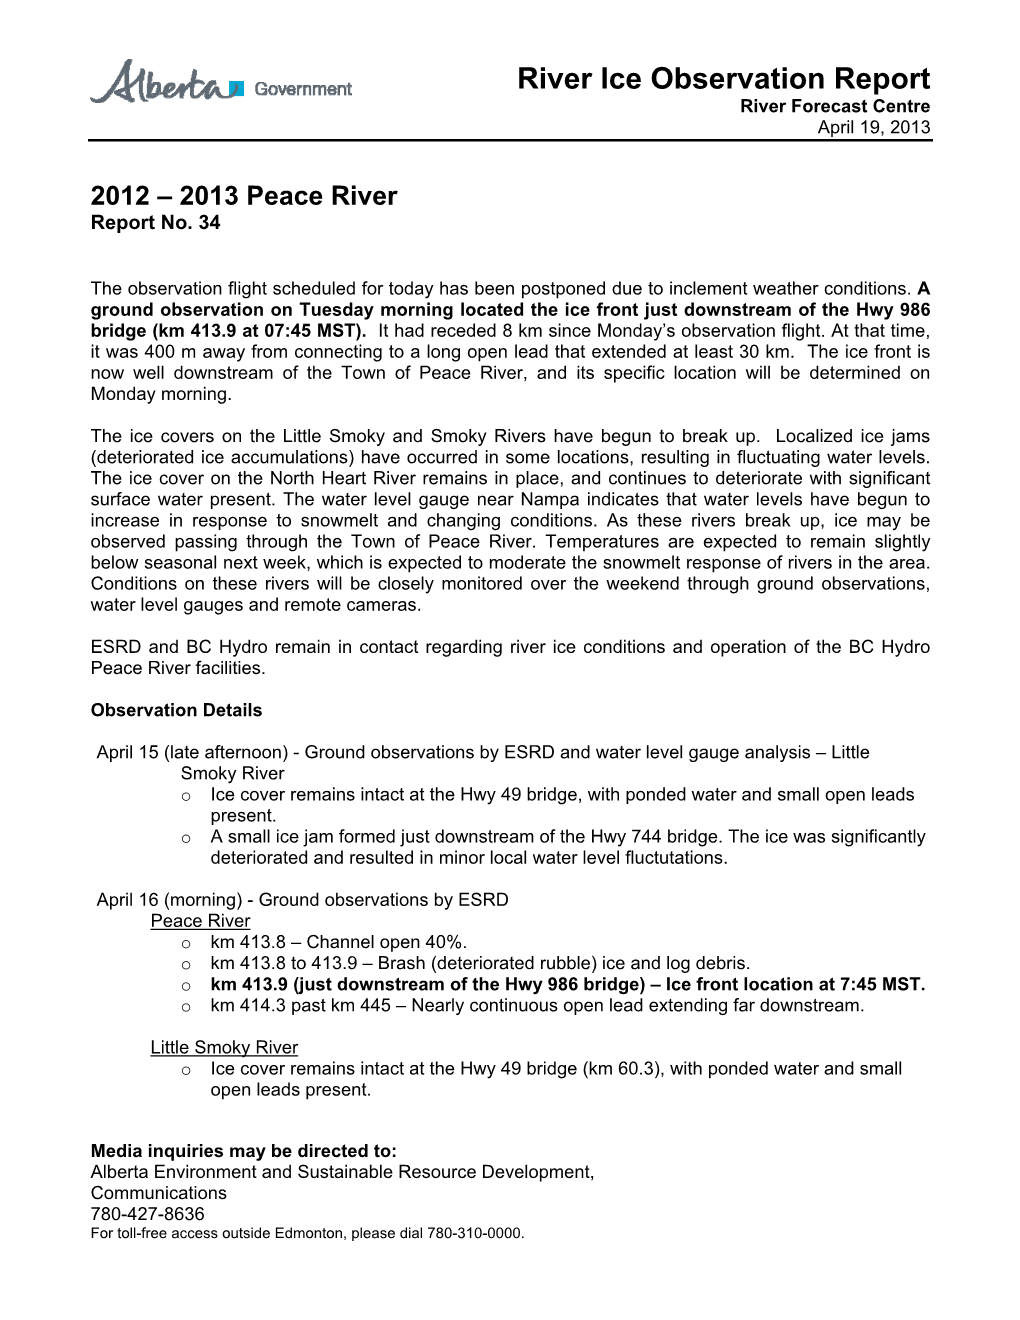 River Ice Observation Report River Forecast Centre April 19, 2013